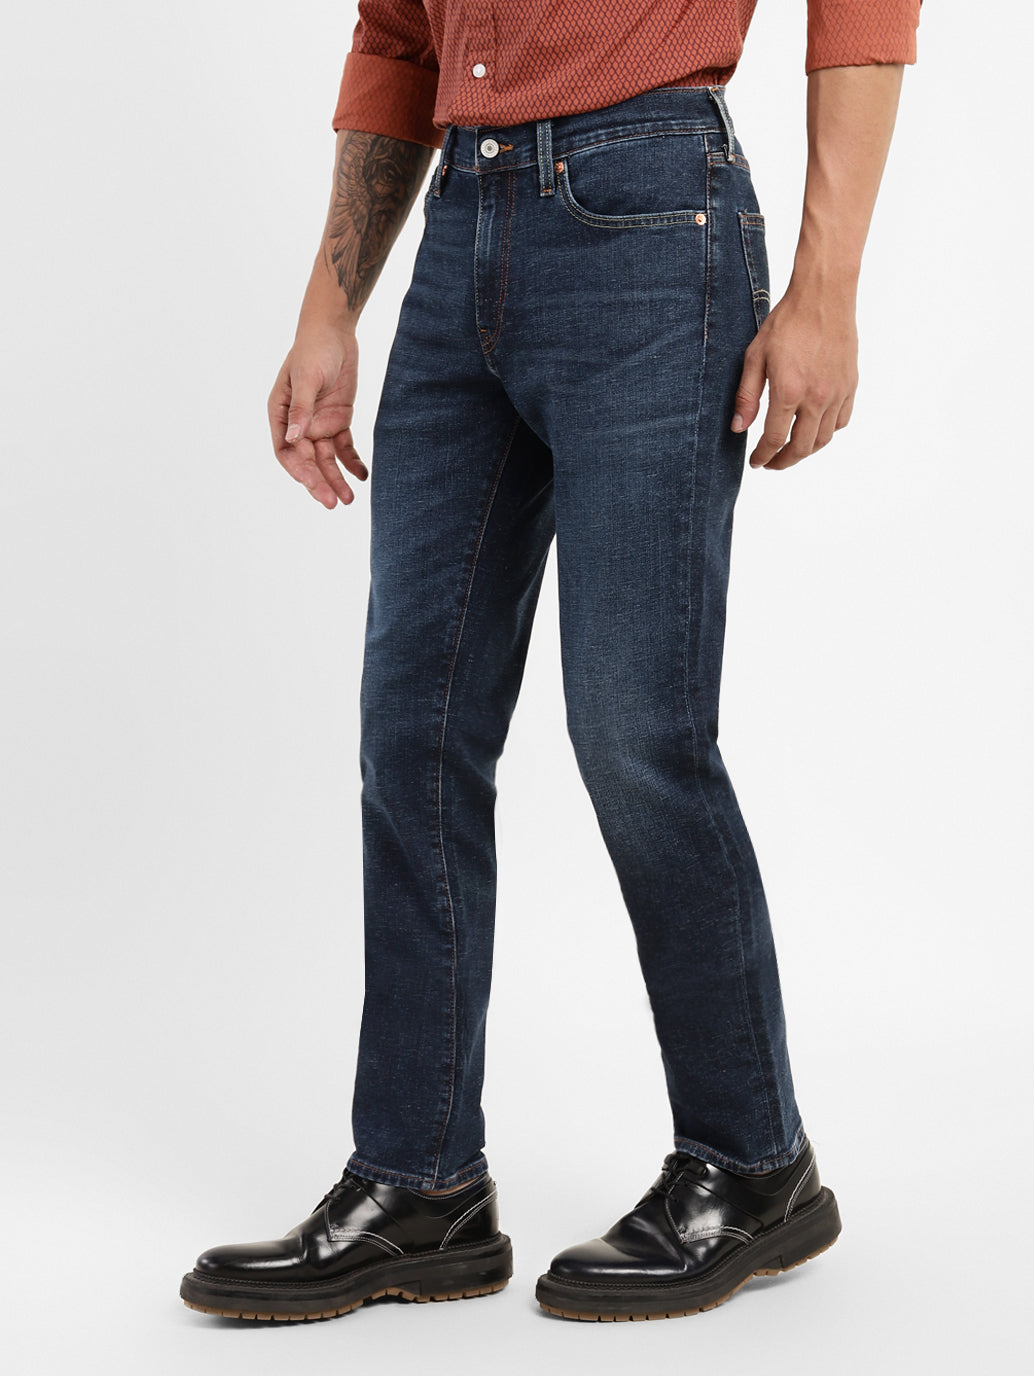 Men's 511 Dark Indigo Slim Fit Faded Jeans